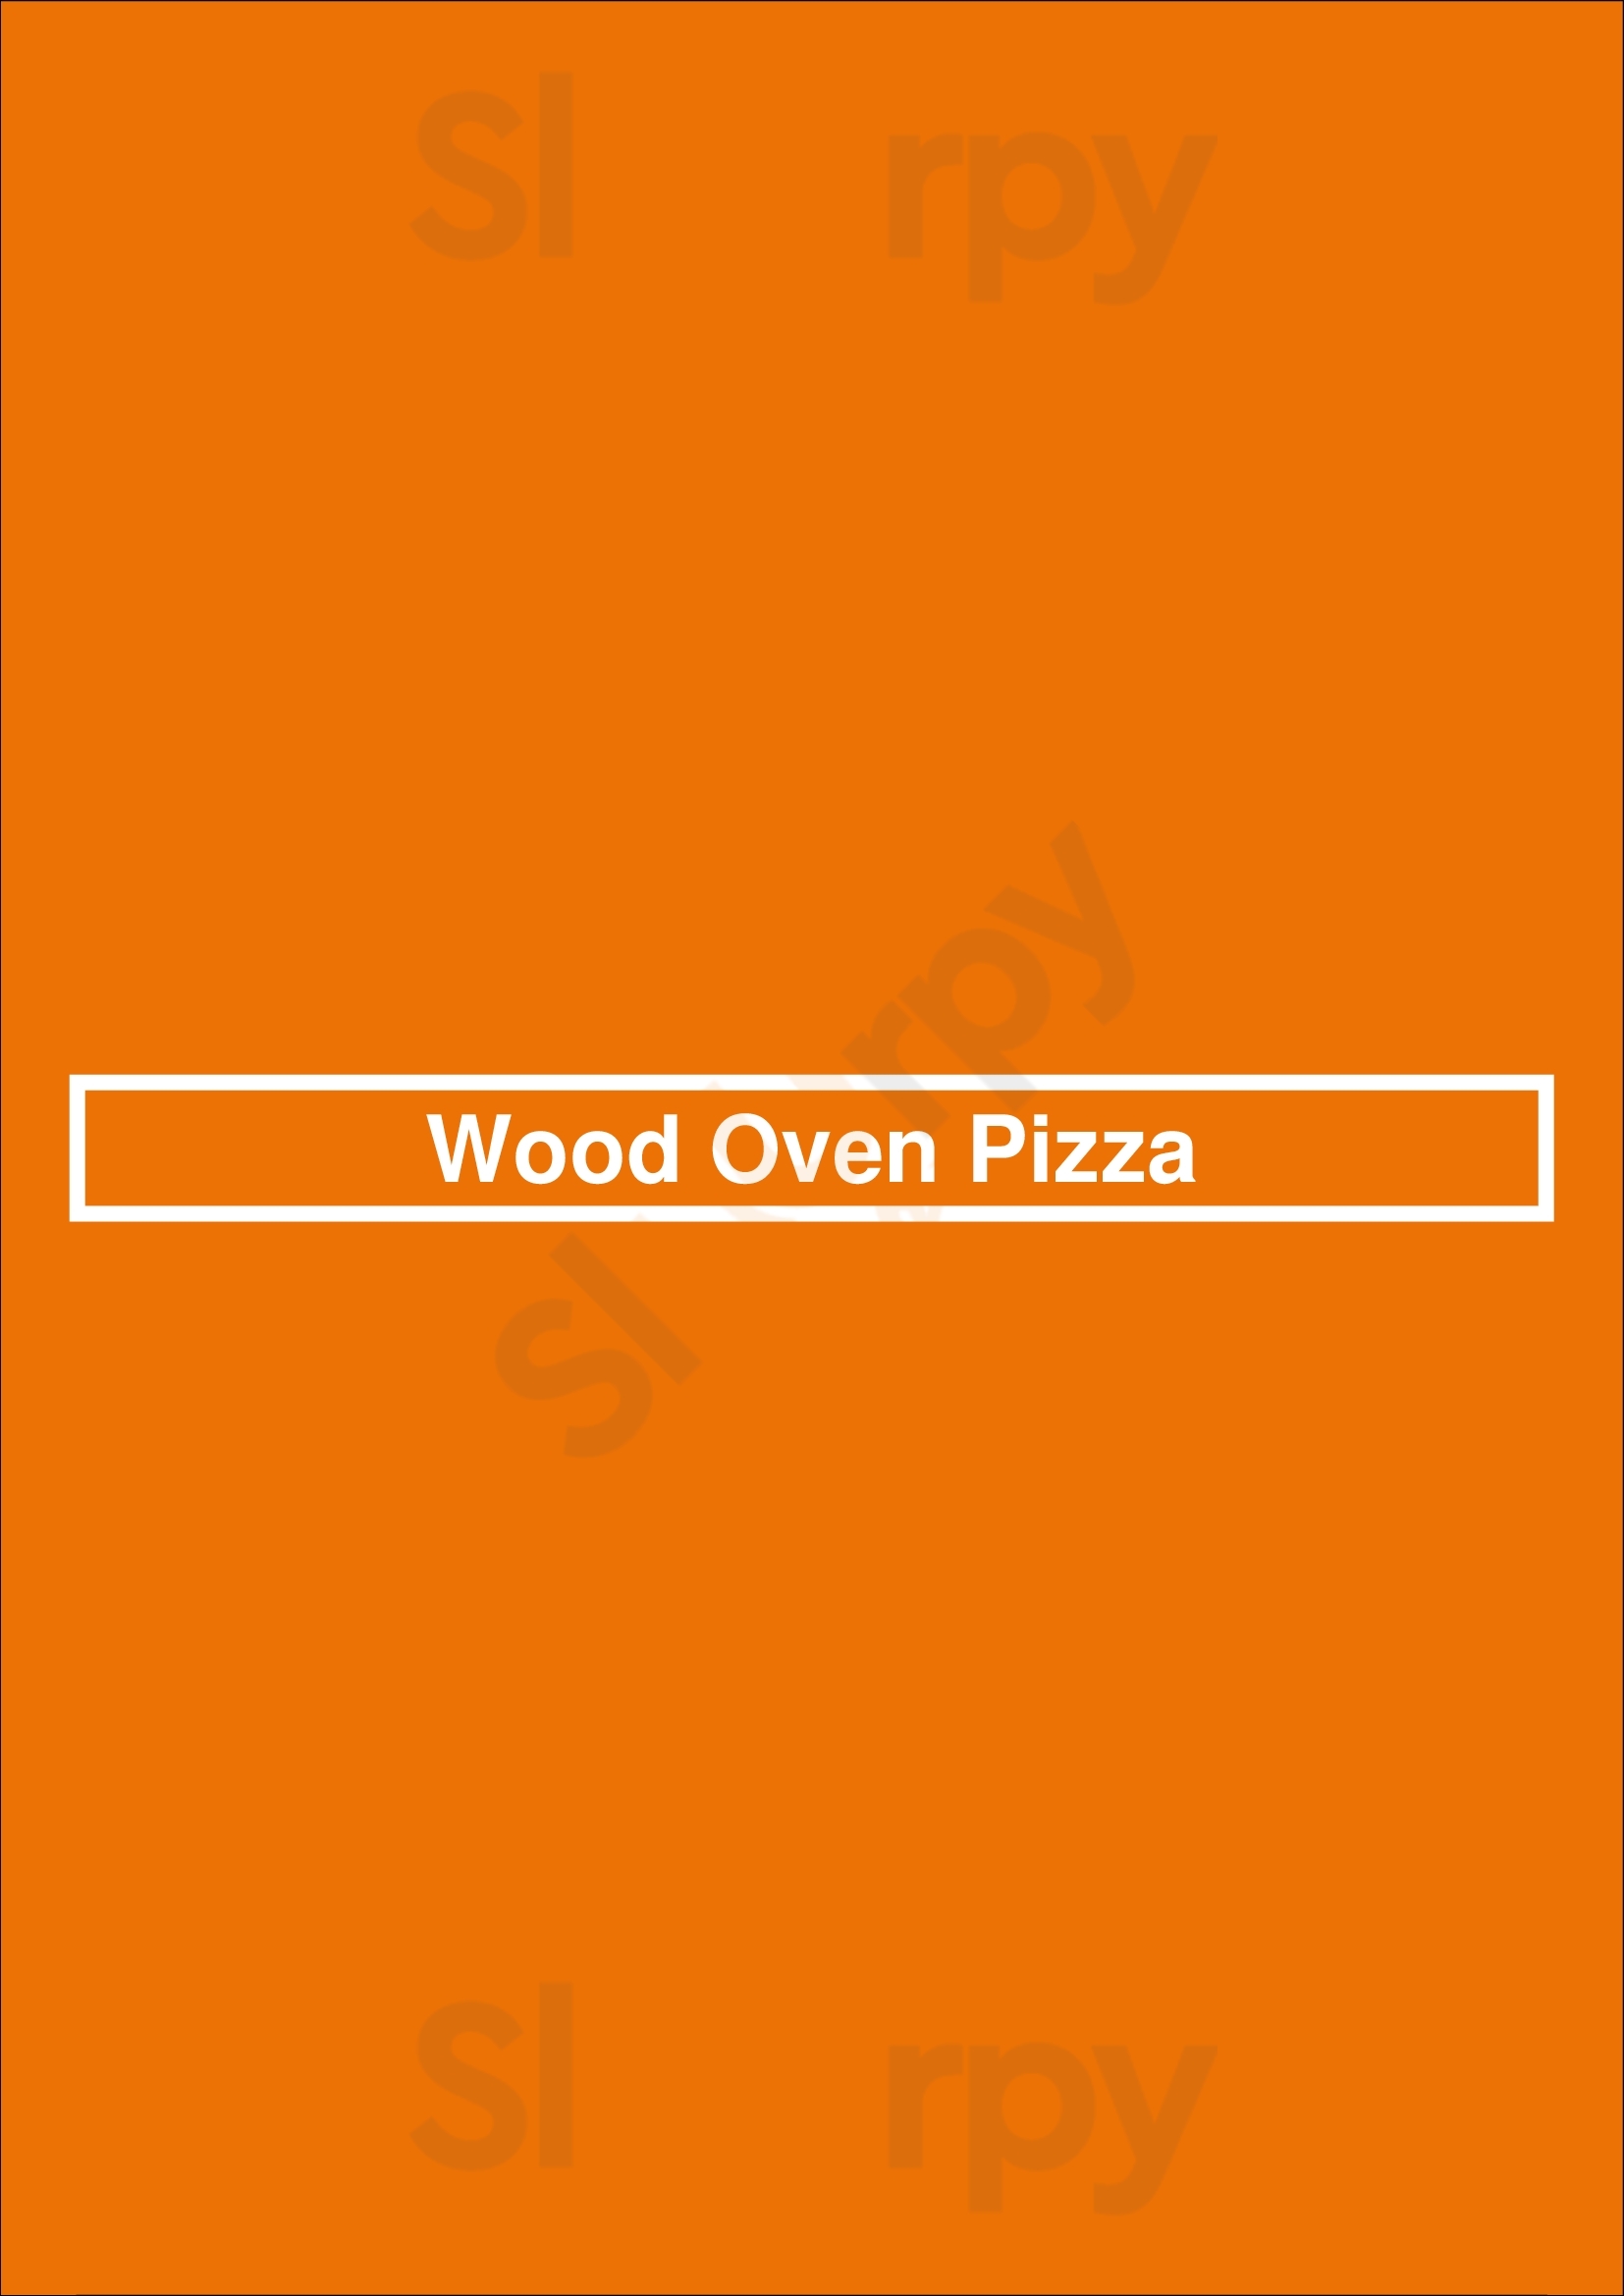 Wood Oven Pizza Geelong Menu - 1